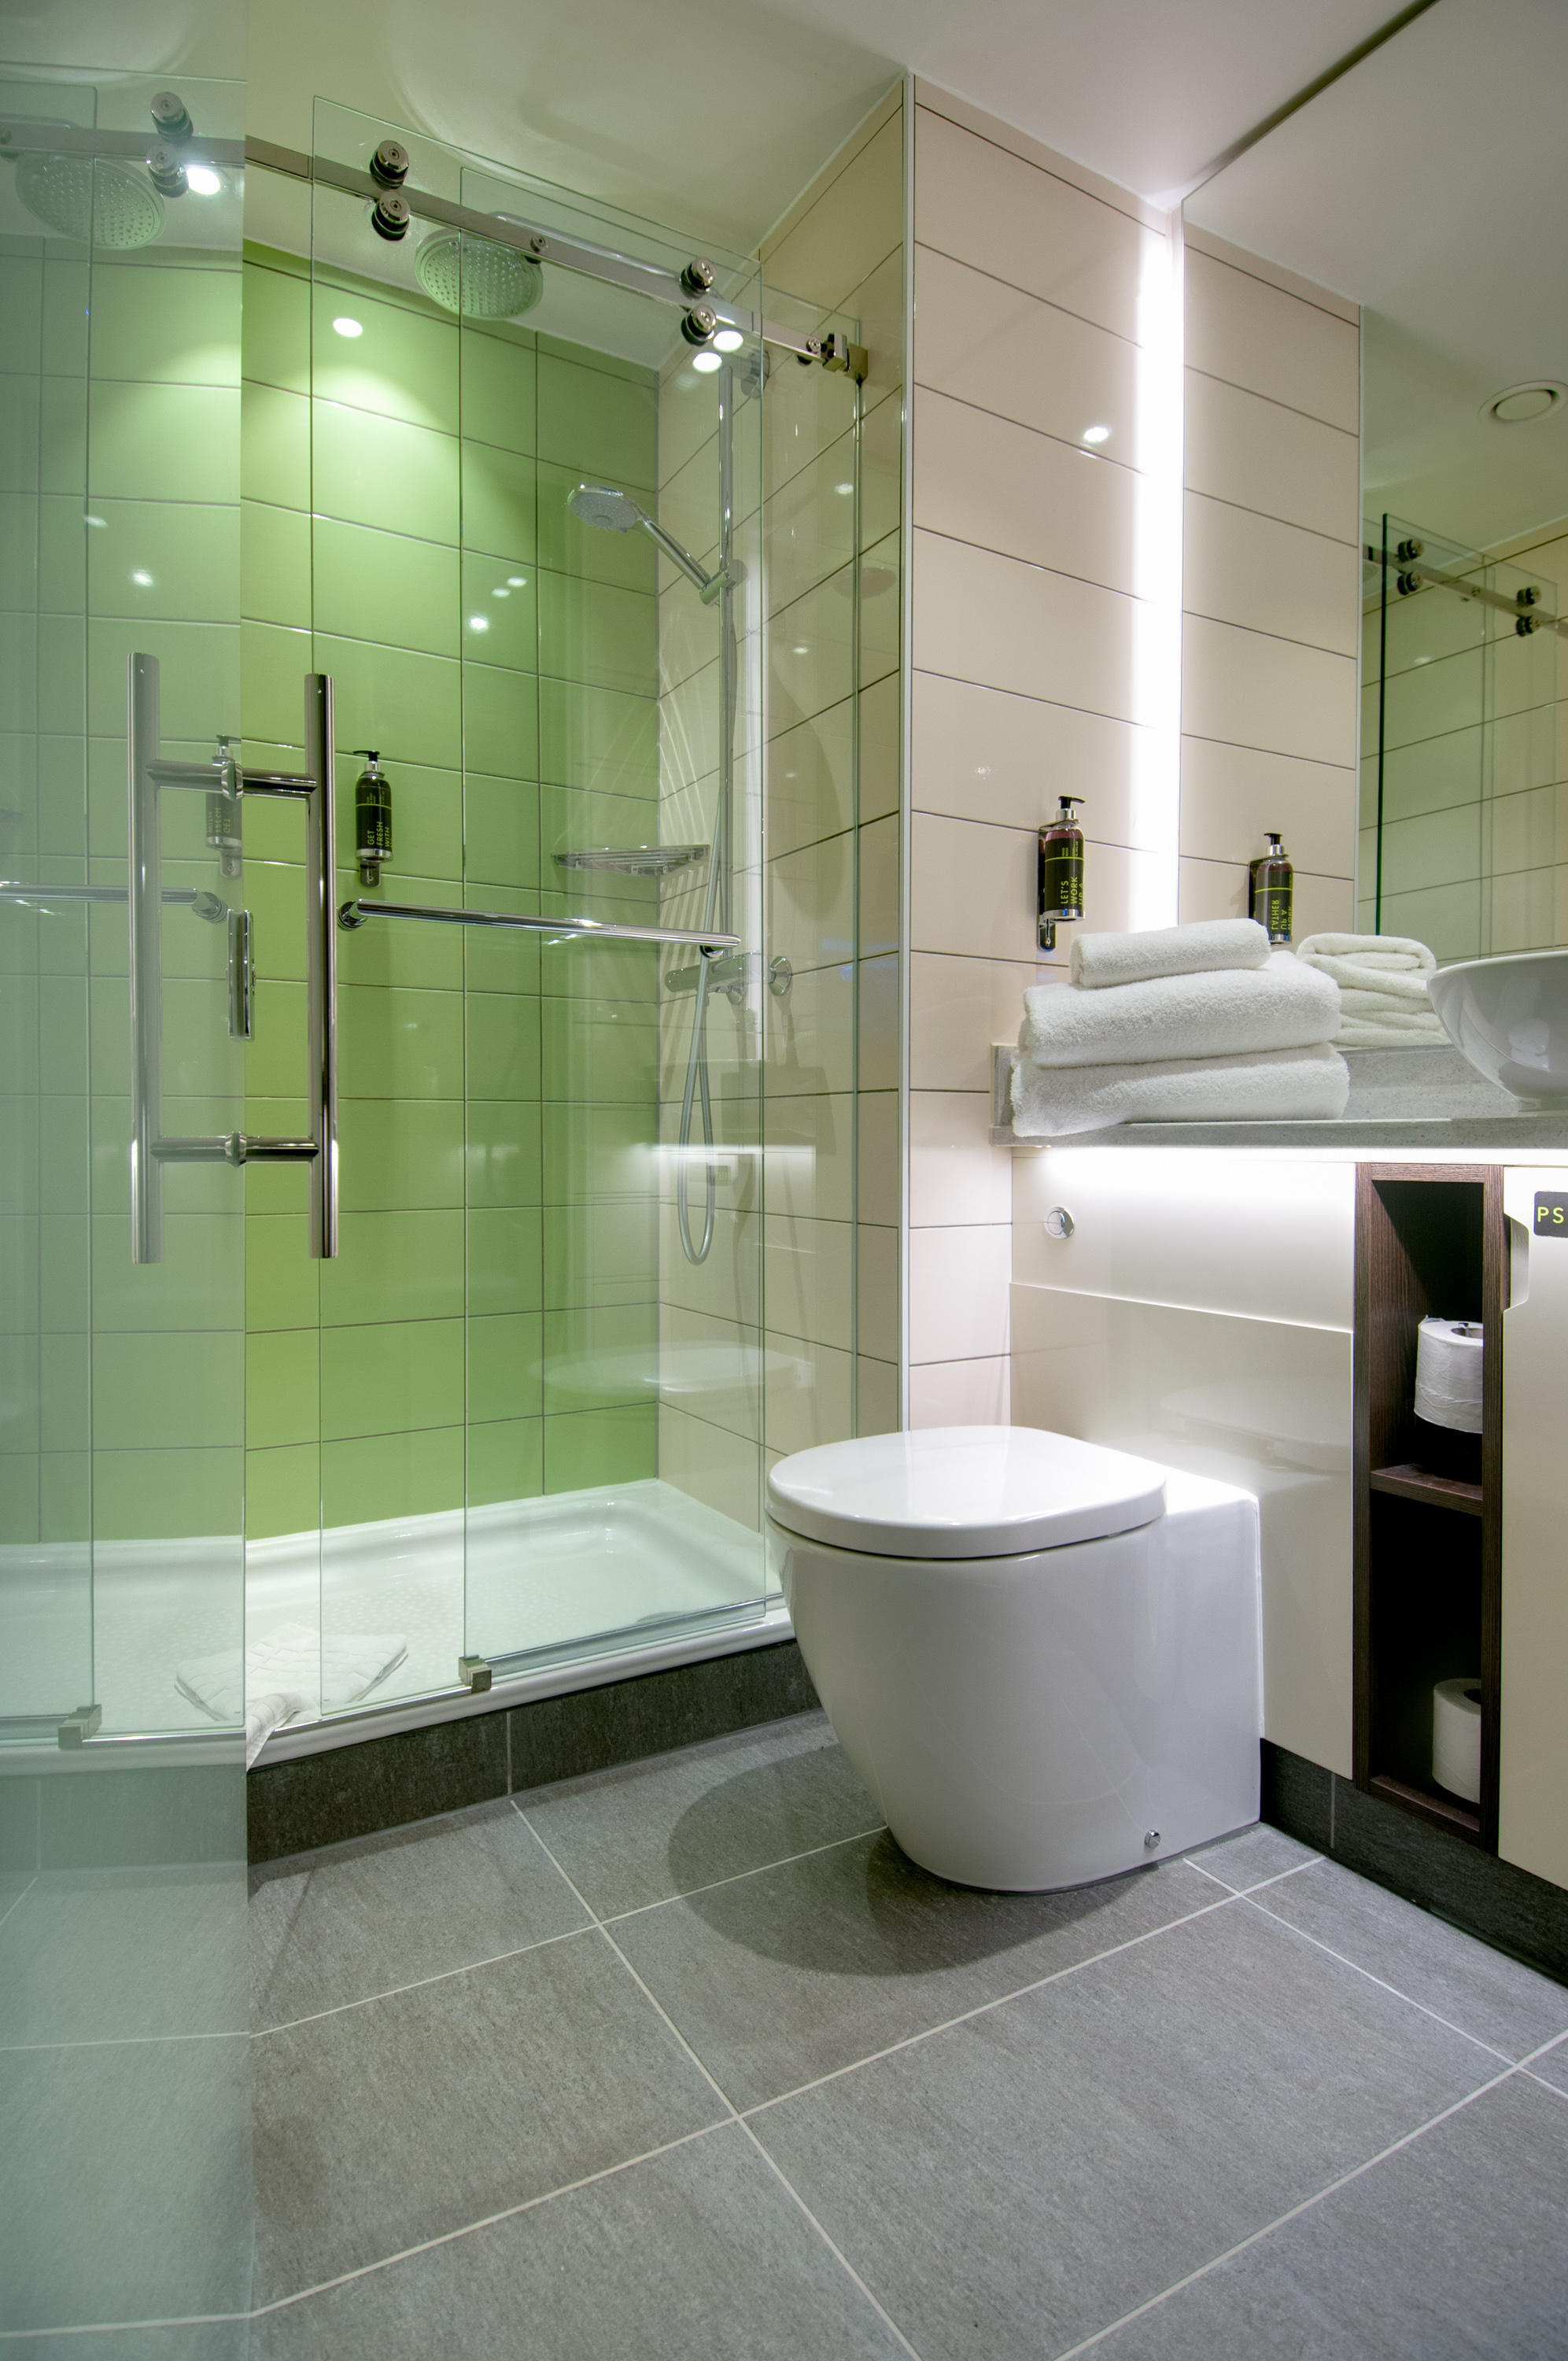 hub by Premier Inn bathroom hub by Premier Inn London Soho hotel London 03333 213104